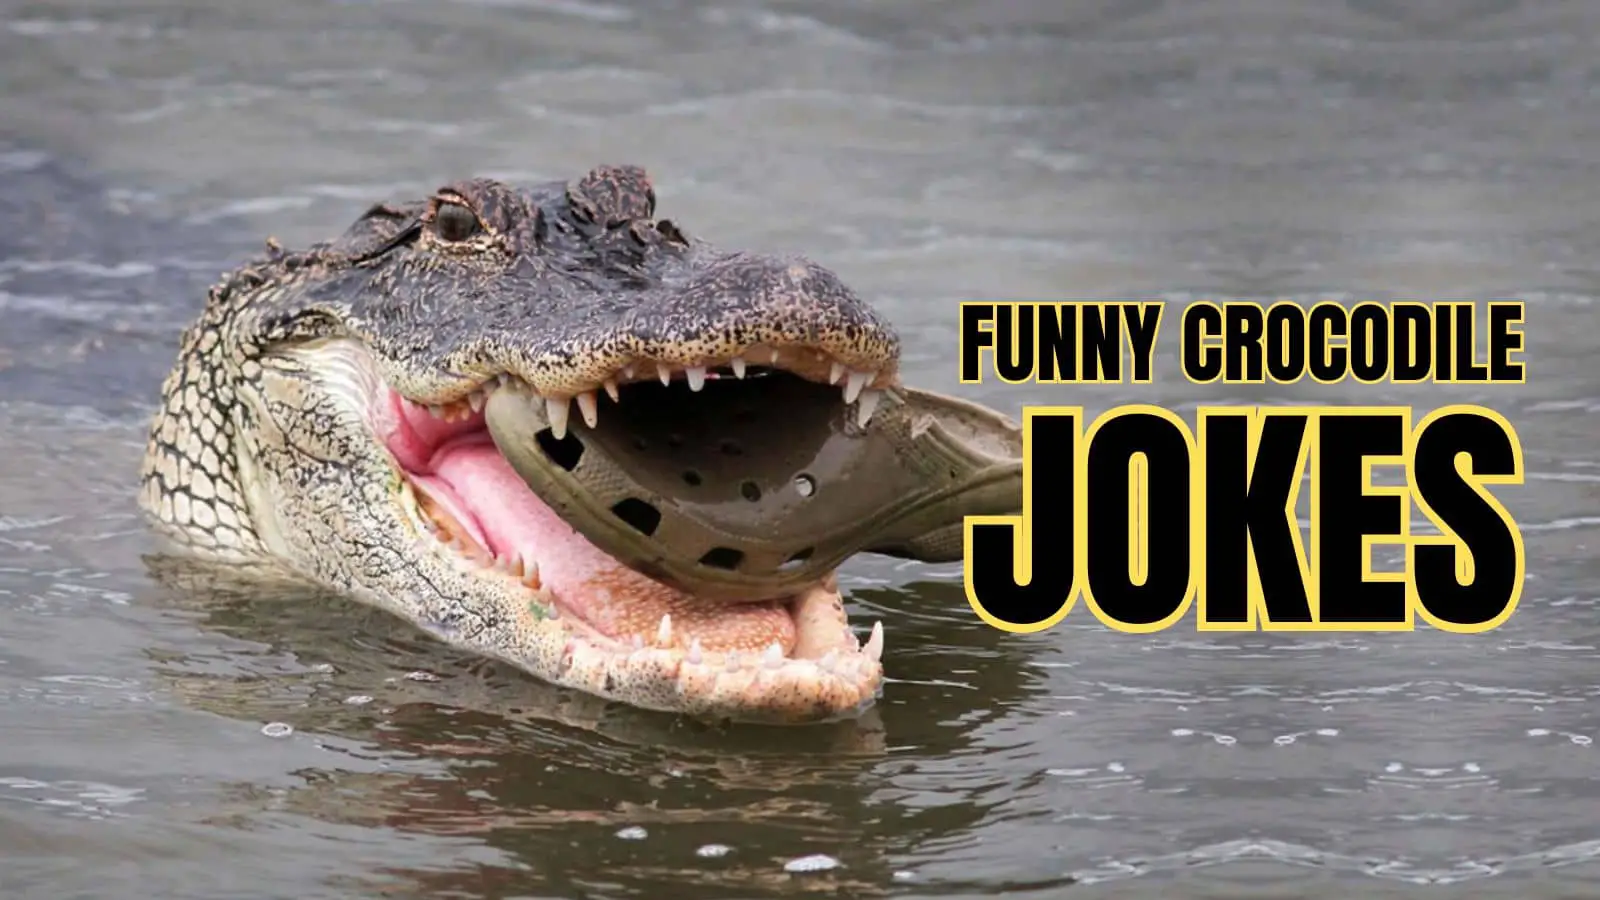 Funny Crocodile Jokes on Reptile